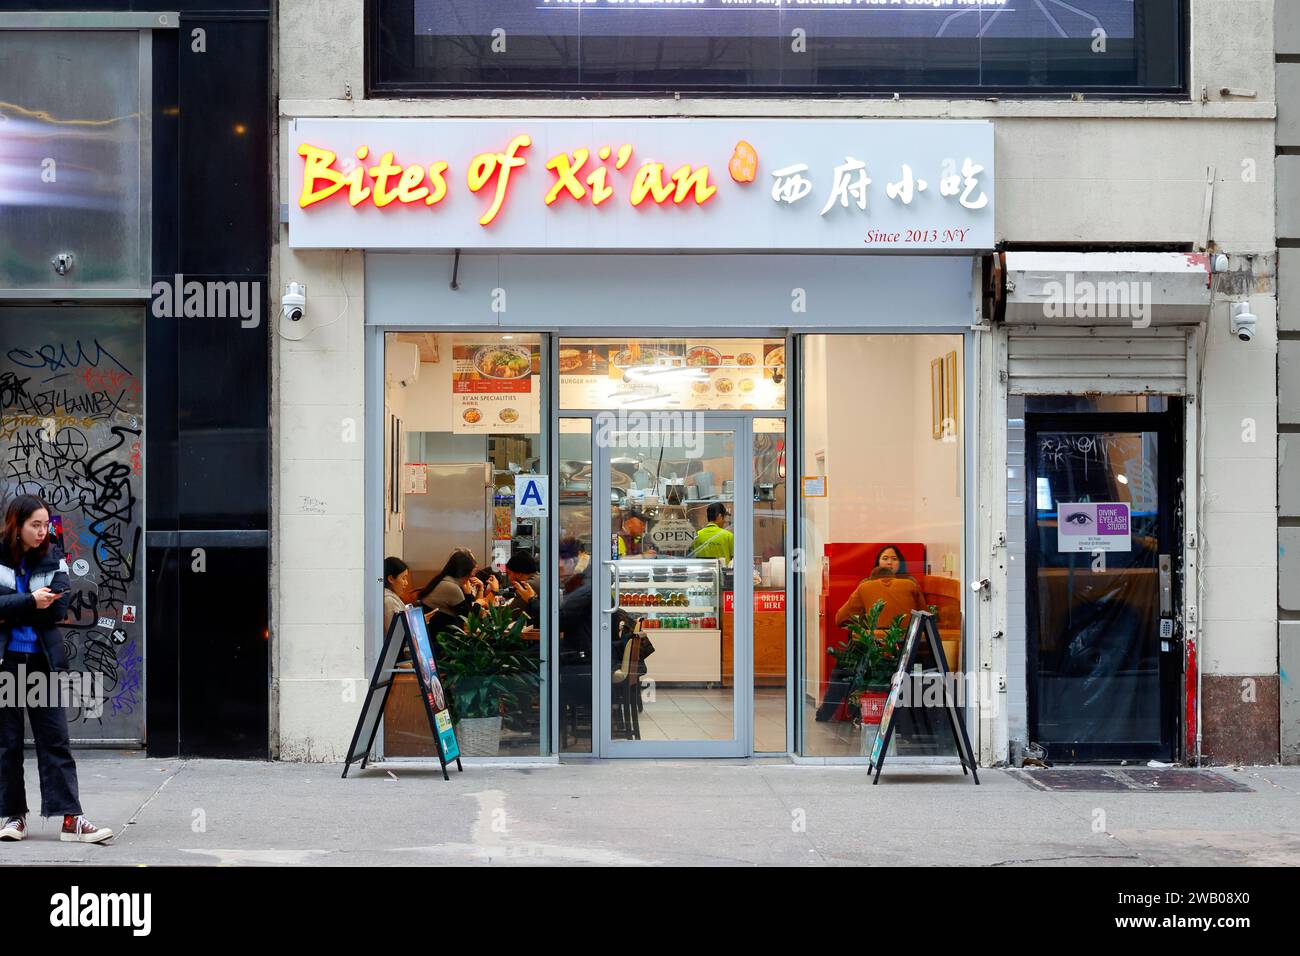 Bits of Xi'an 西府小吃, 884 6th Ave, New York, New York, New York, New York, New York, New York, New York, New York, ein chinesisches Shaanxi-Restaurant in Midtown Manhattan. Stockfoto